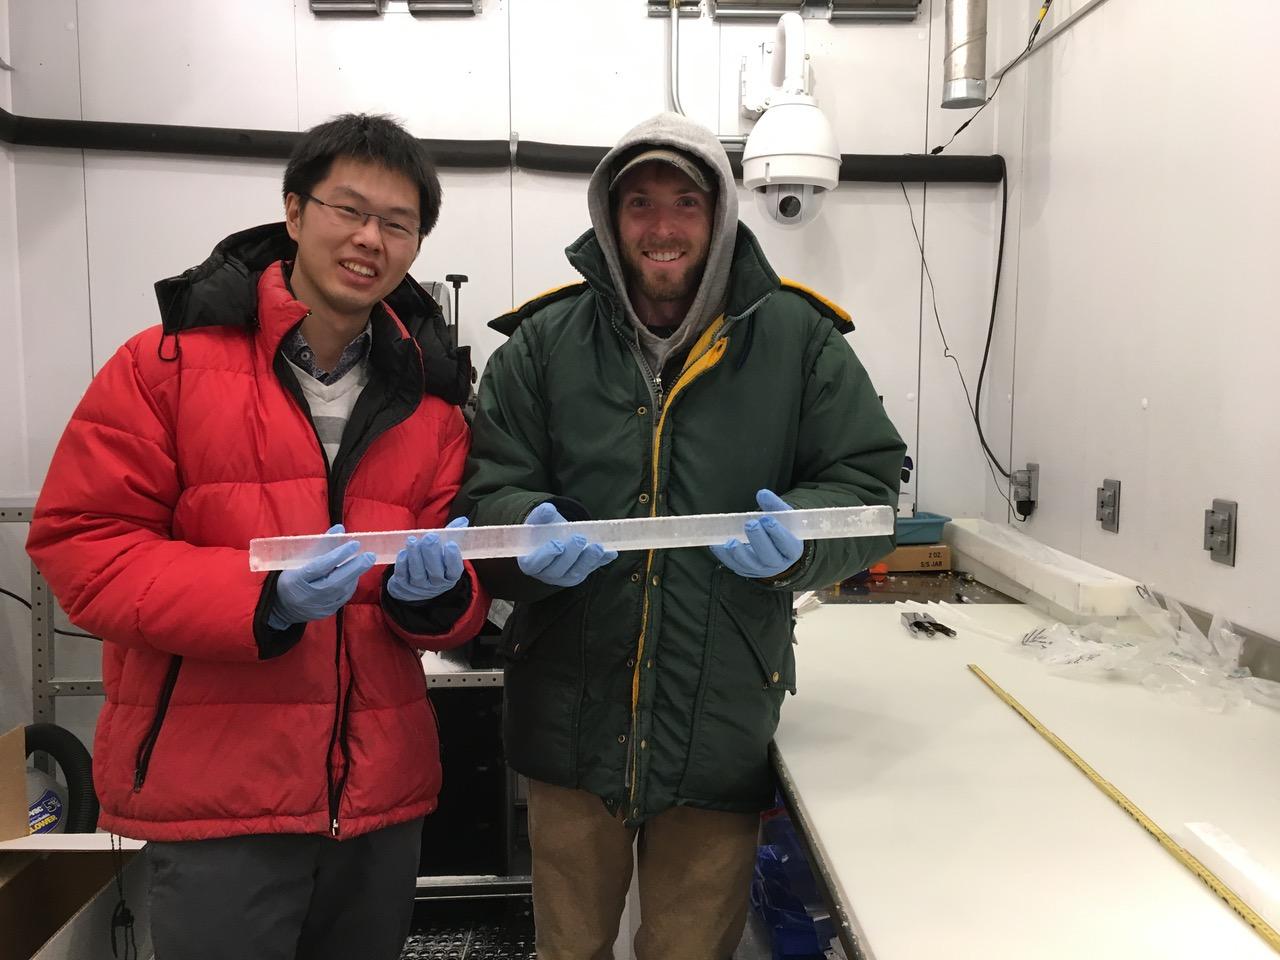 Pengfei Liu (left) and Nathan Chellman with an ice core sample (Photo Pengfei Liu)